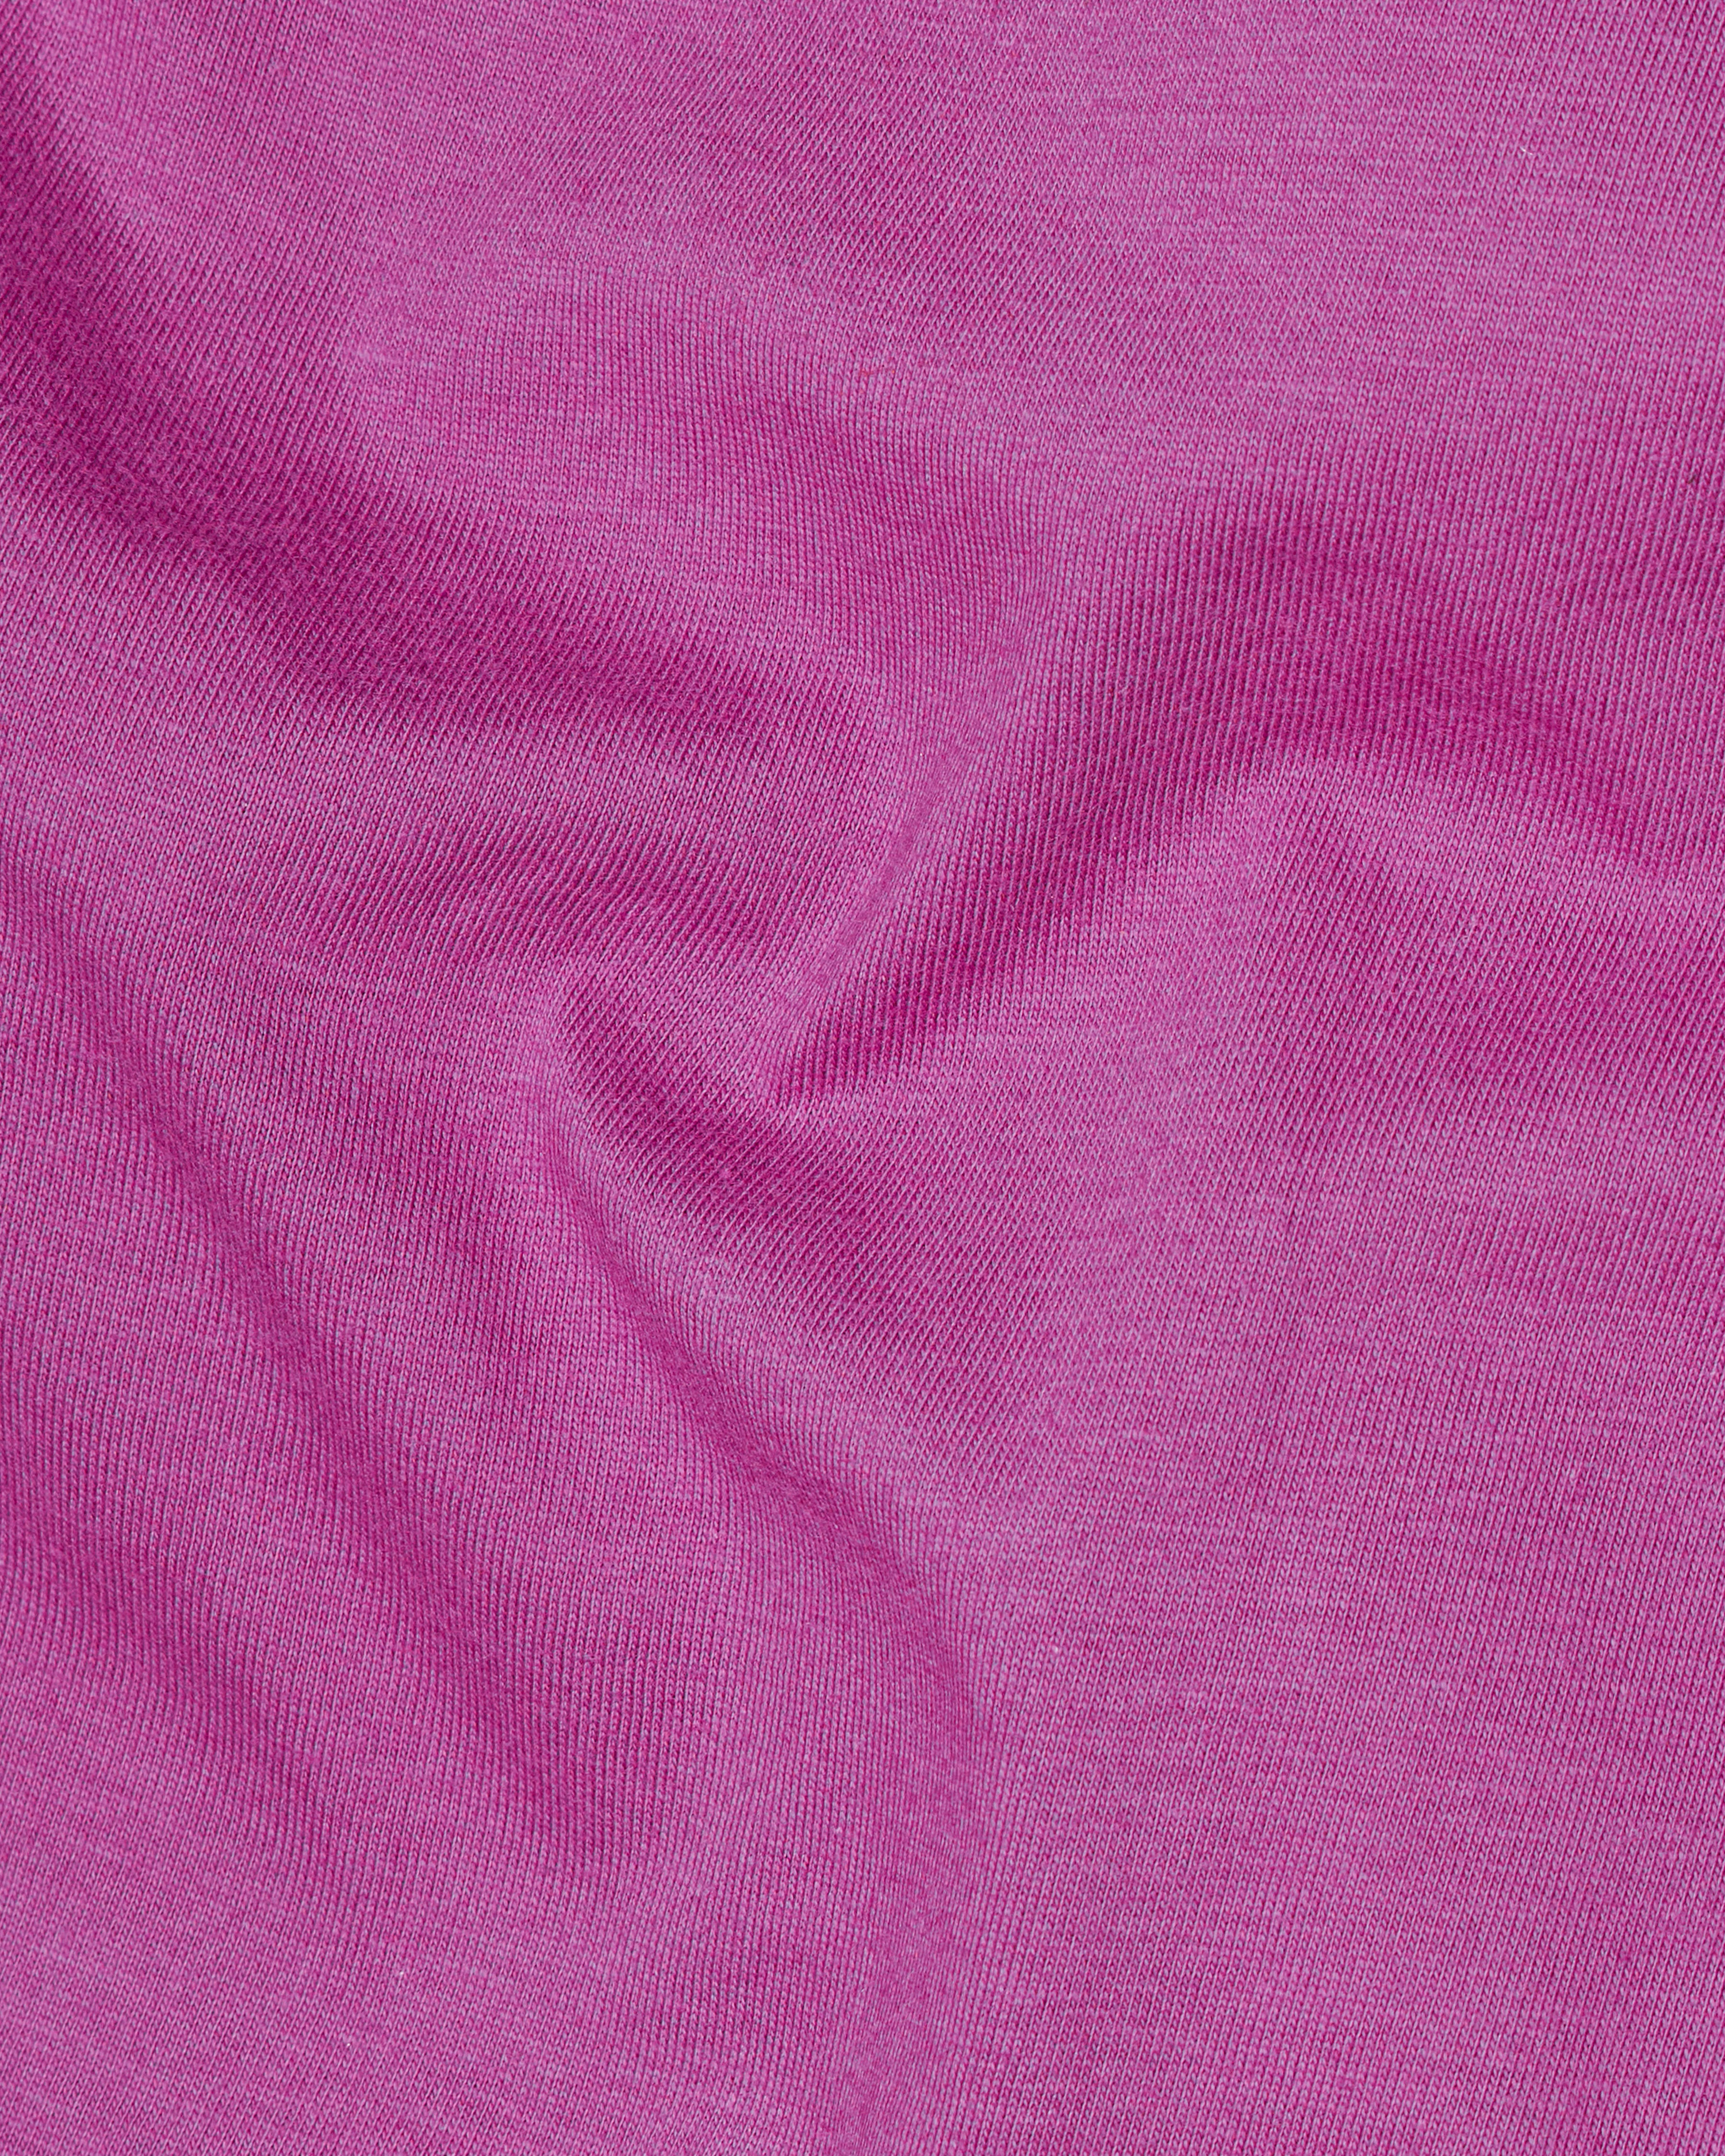 Bashful Pink Rubber Printed Super Soft Organic Cotton Sweatshirt TS166-W01-S, TS166-W01-M, TS166-W01-L, TS166-W01-XL, TS166-W01-XXL